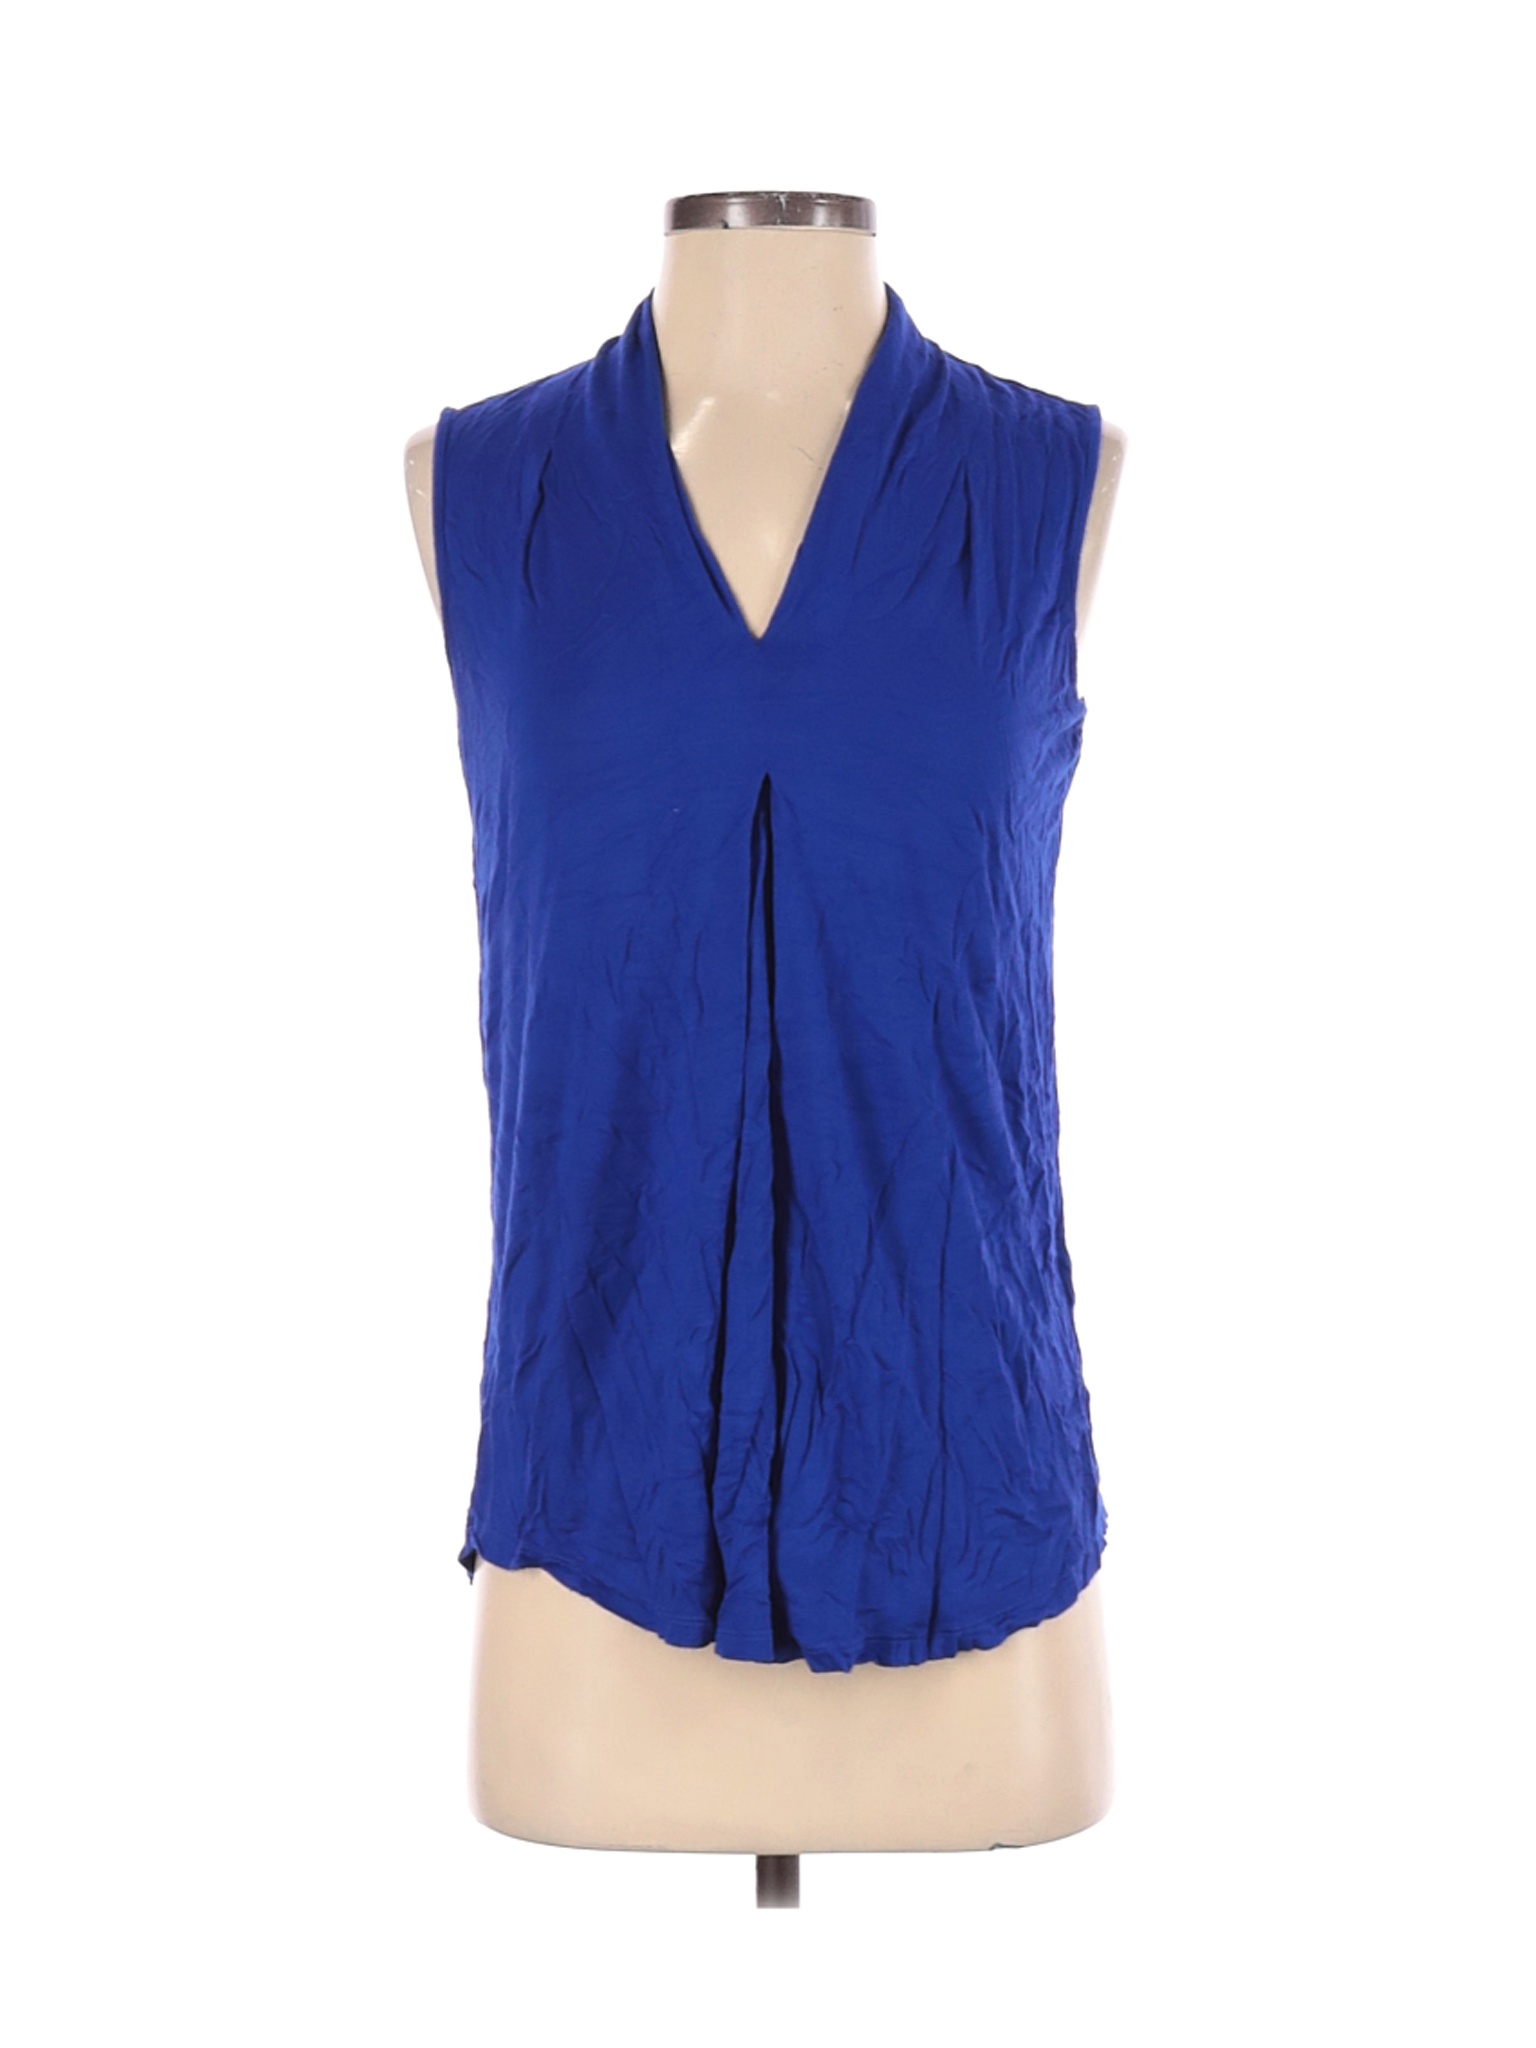 Cable & Gauge Women Blue Sleeveless Top S | eBay